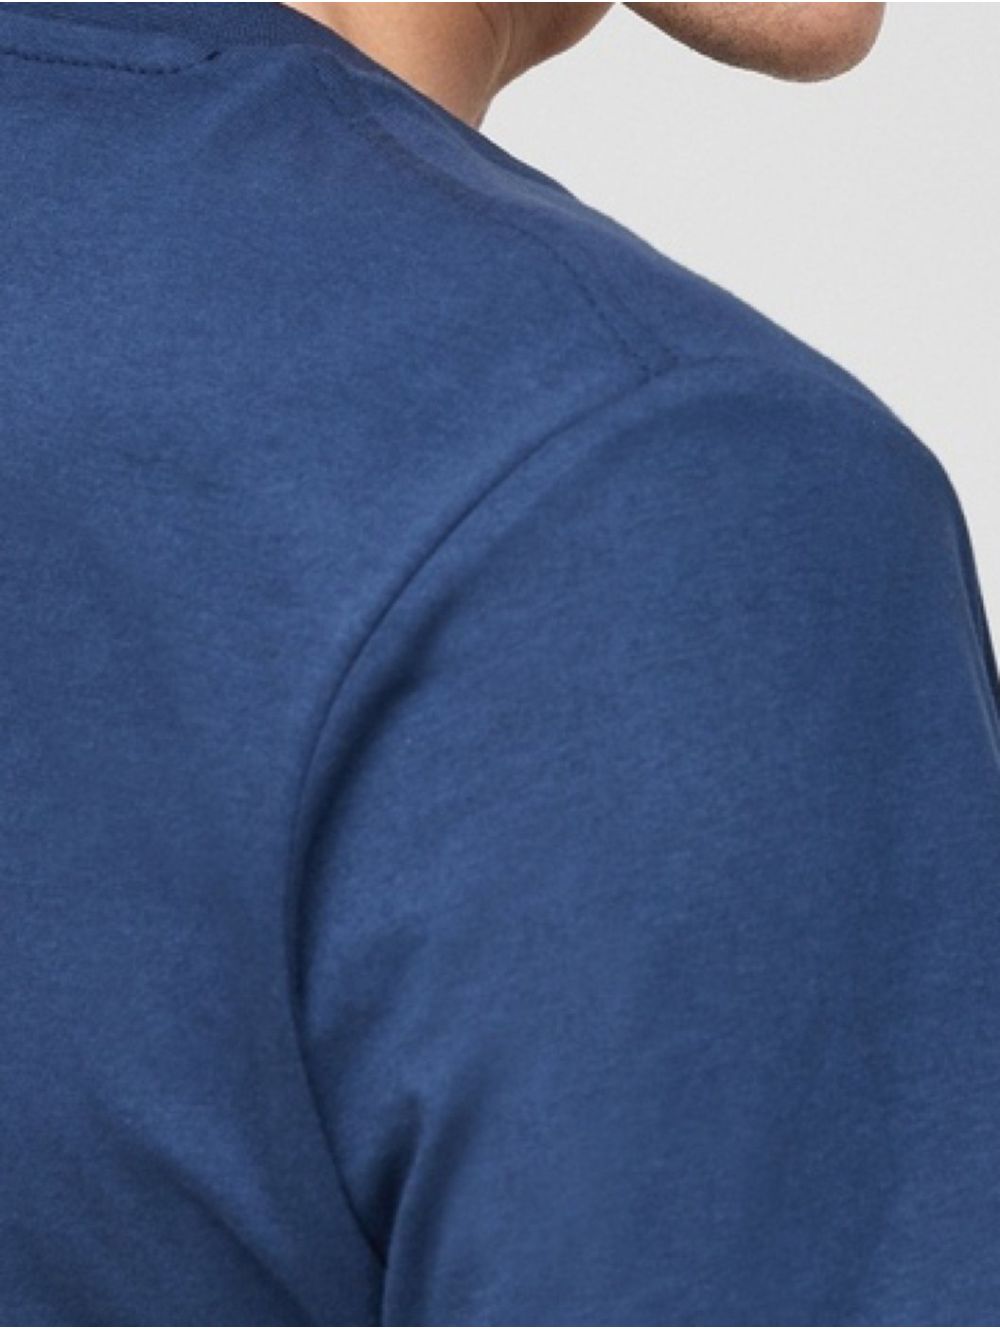 S.OLIVER Men's blue short-sleeved jersey T-Shirt 2057432-5693 Ocean Blue